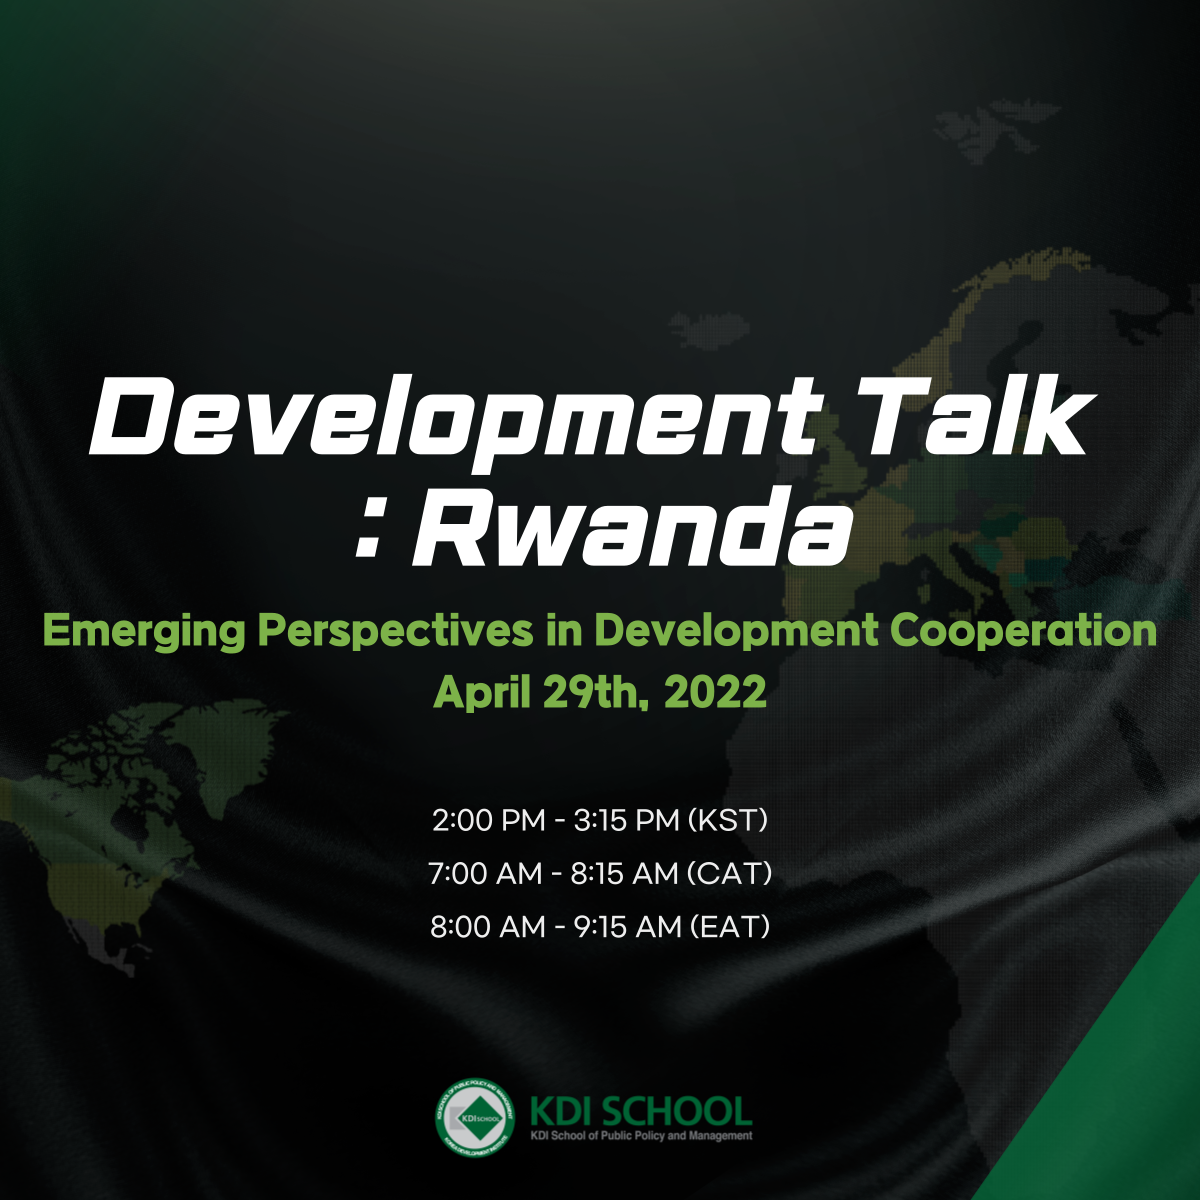 [RSVP] Invitation to the 2022 Development Talks Series (1): Rwanda (April 29, Friday @ 2:00-3:15 pm)